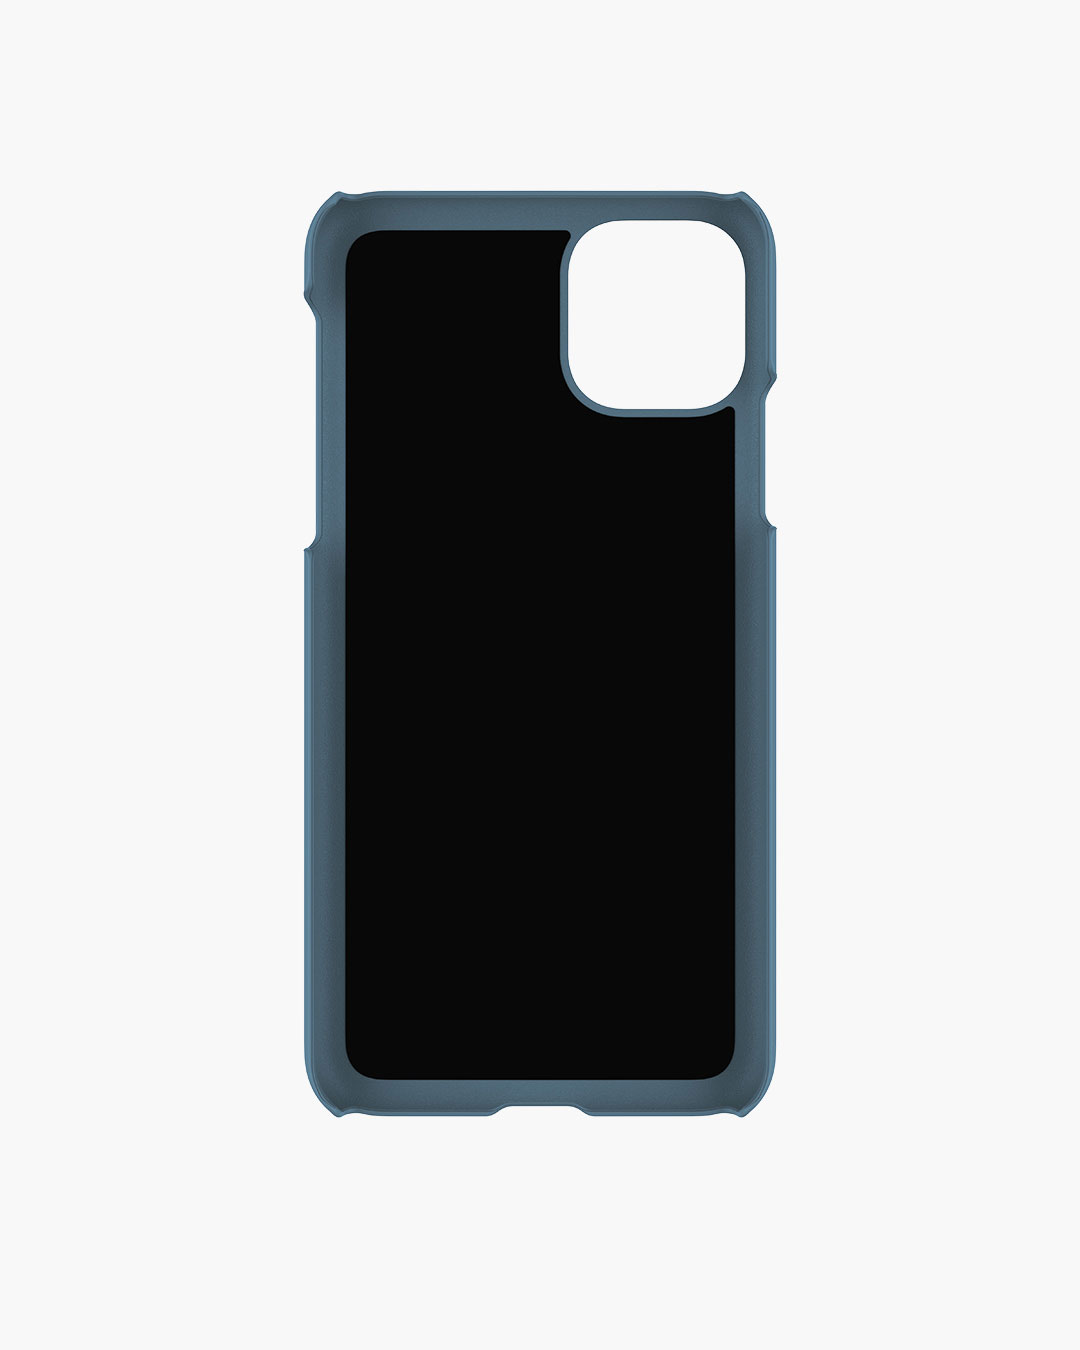 Fresh 'n Rebel - Phone Case iPhone 11 Pro - Dive Blue